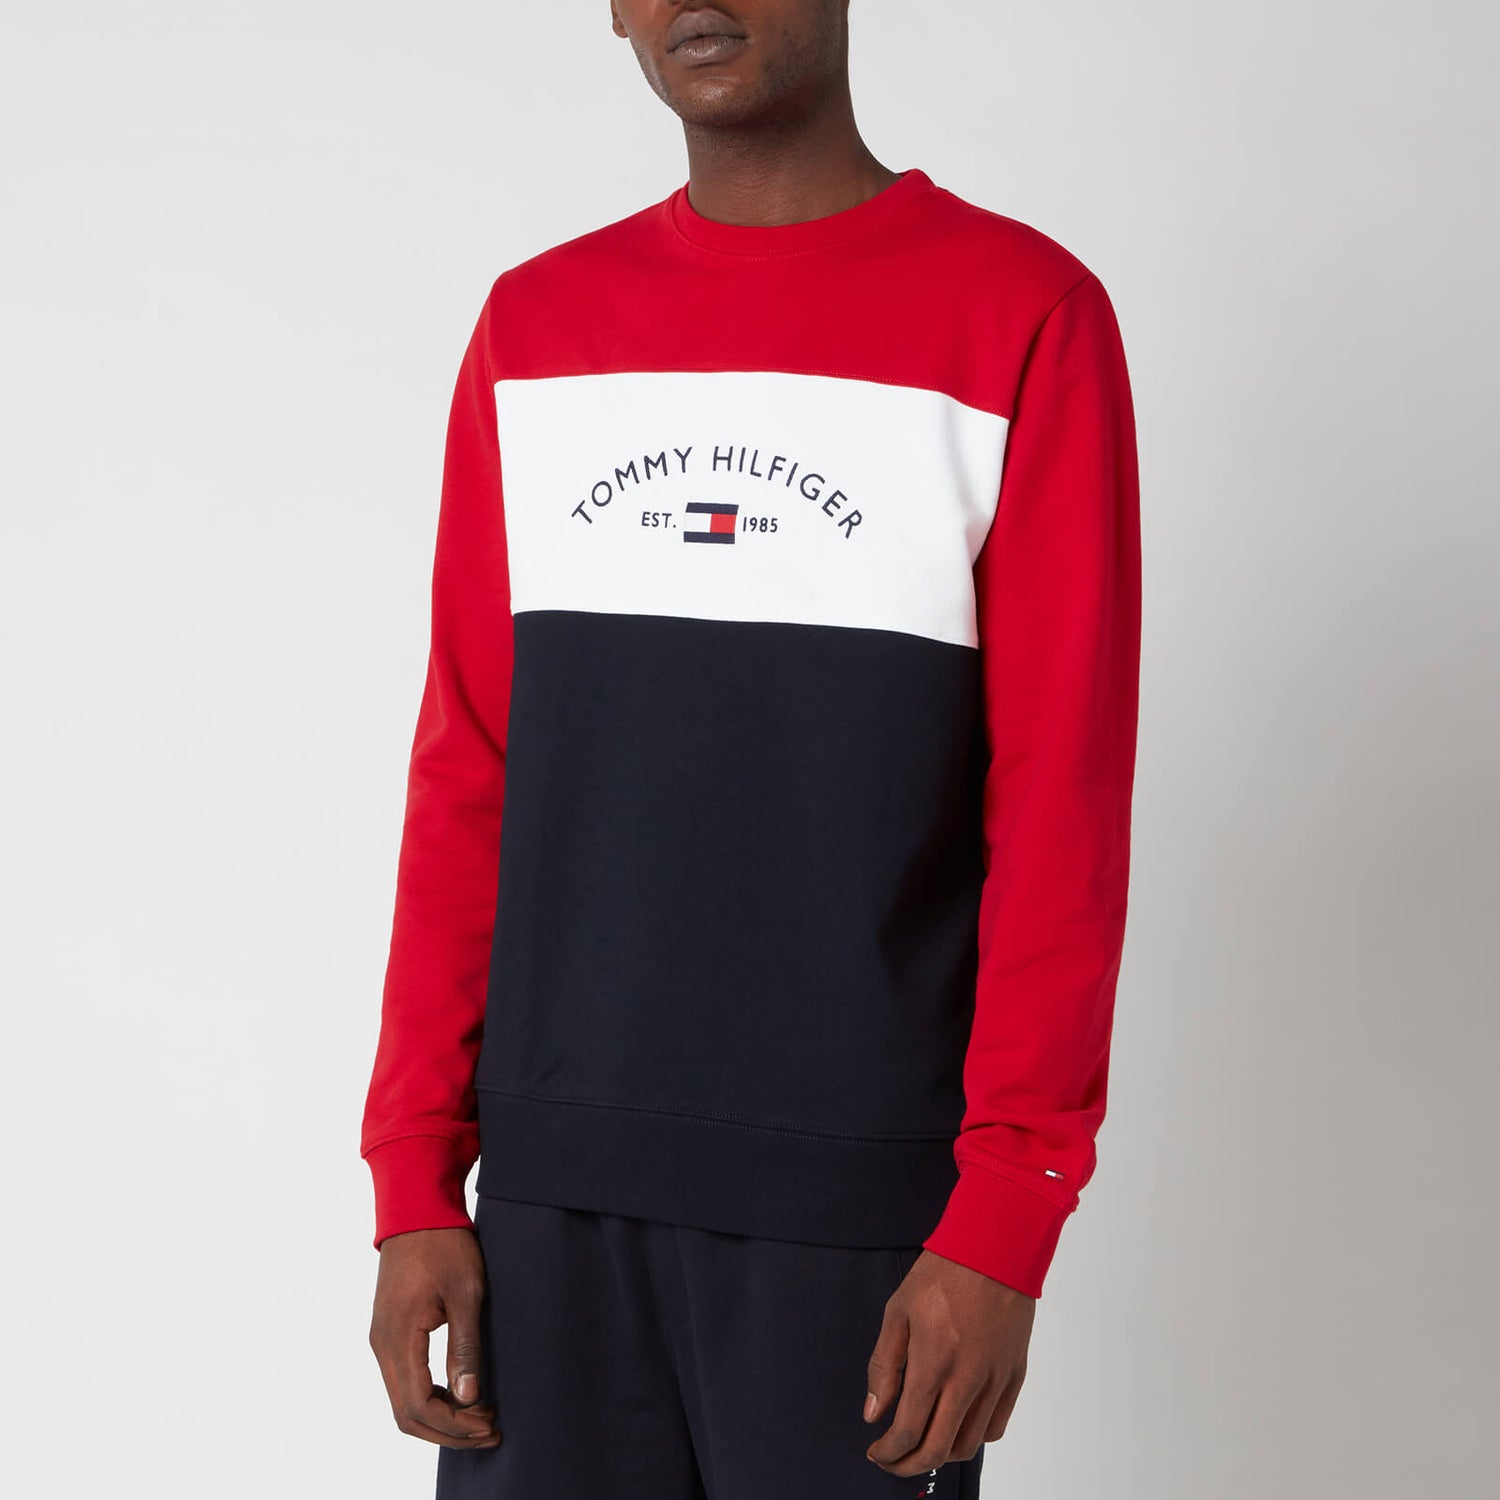 Tommy Hilfiger Men's Embroidered Signature Crewneck Sweatshirt - Red Multi